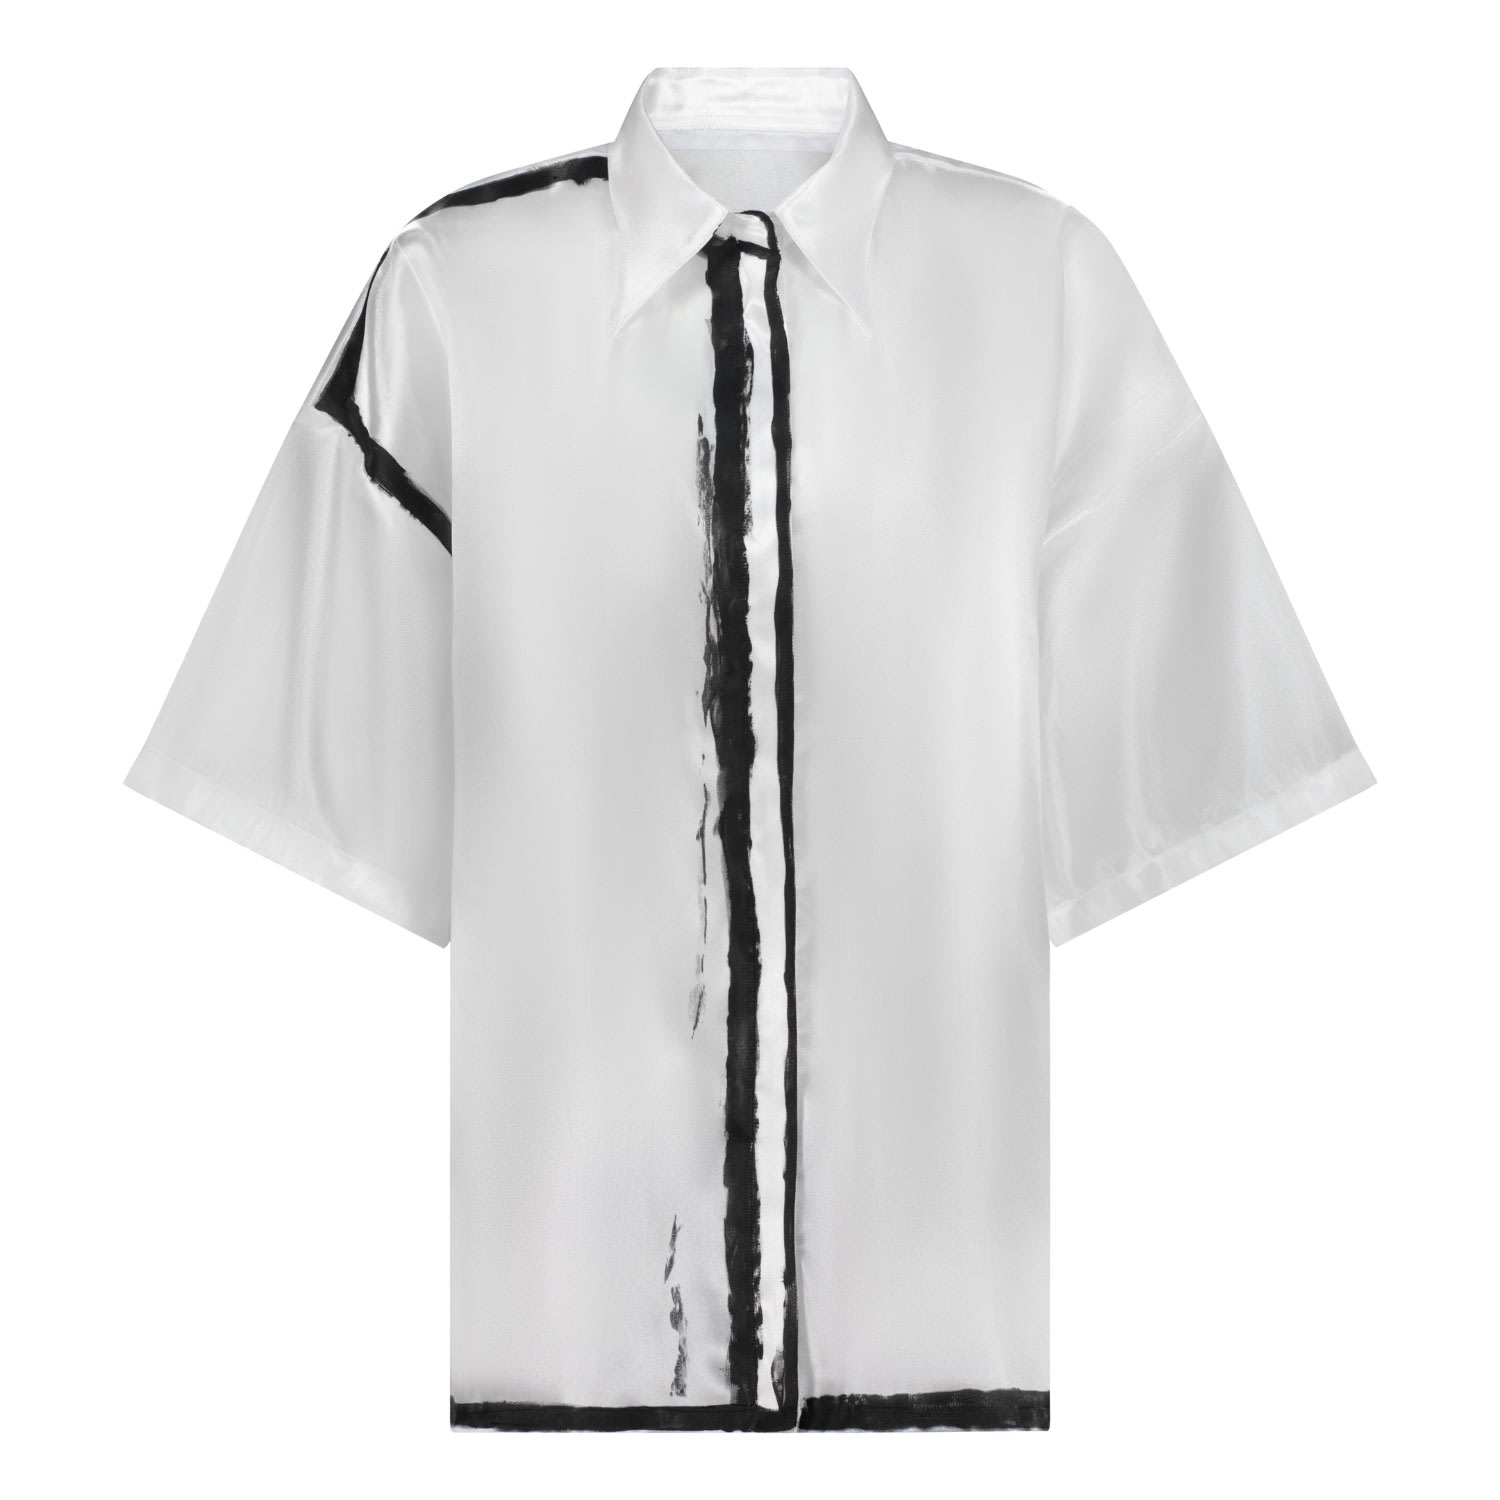 Black / White Crafted Mens Shirt Small ÚCHÈ By Amber